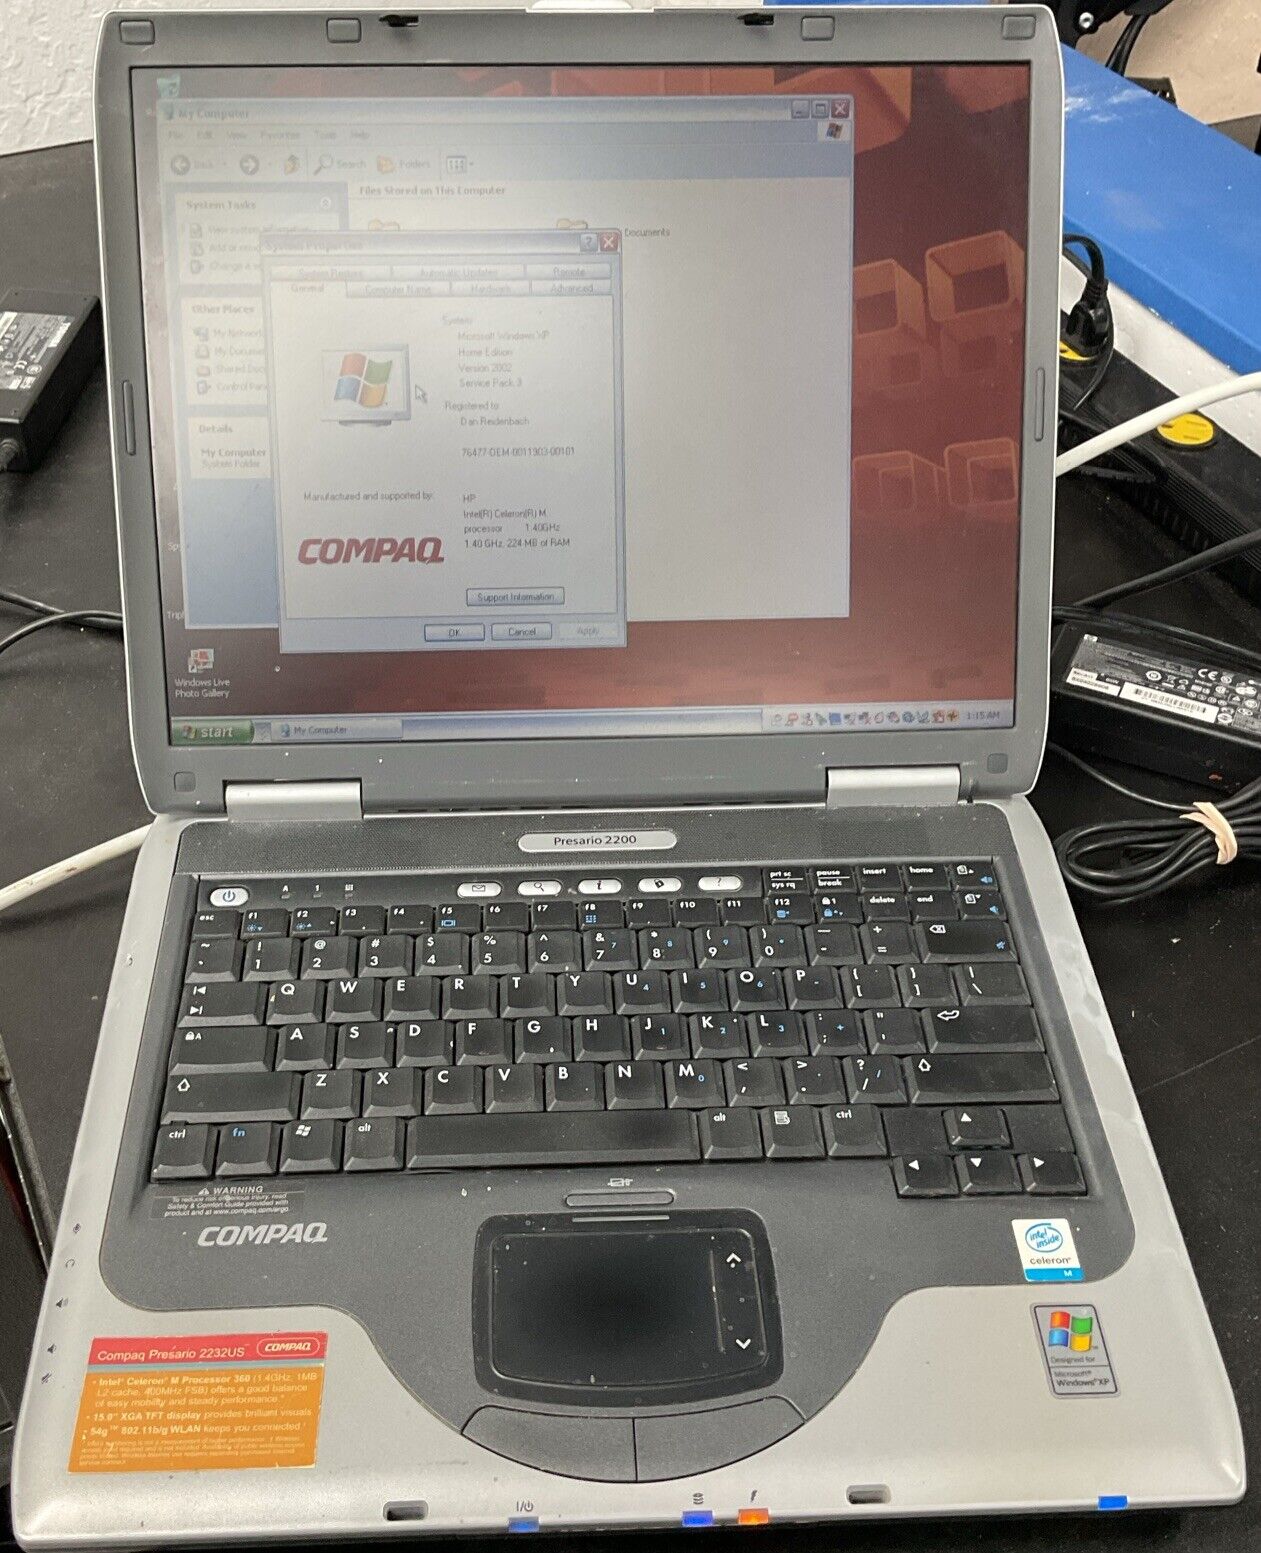 Compaq Presario 2200 Laptop Intel Celeron M @ 1.40GHz 224MB Ram 40GB HDD WIN XP